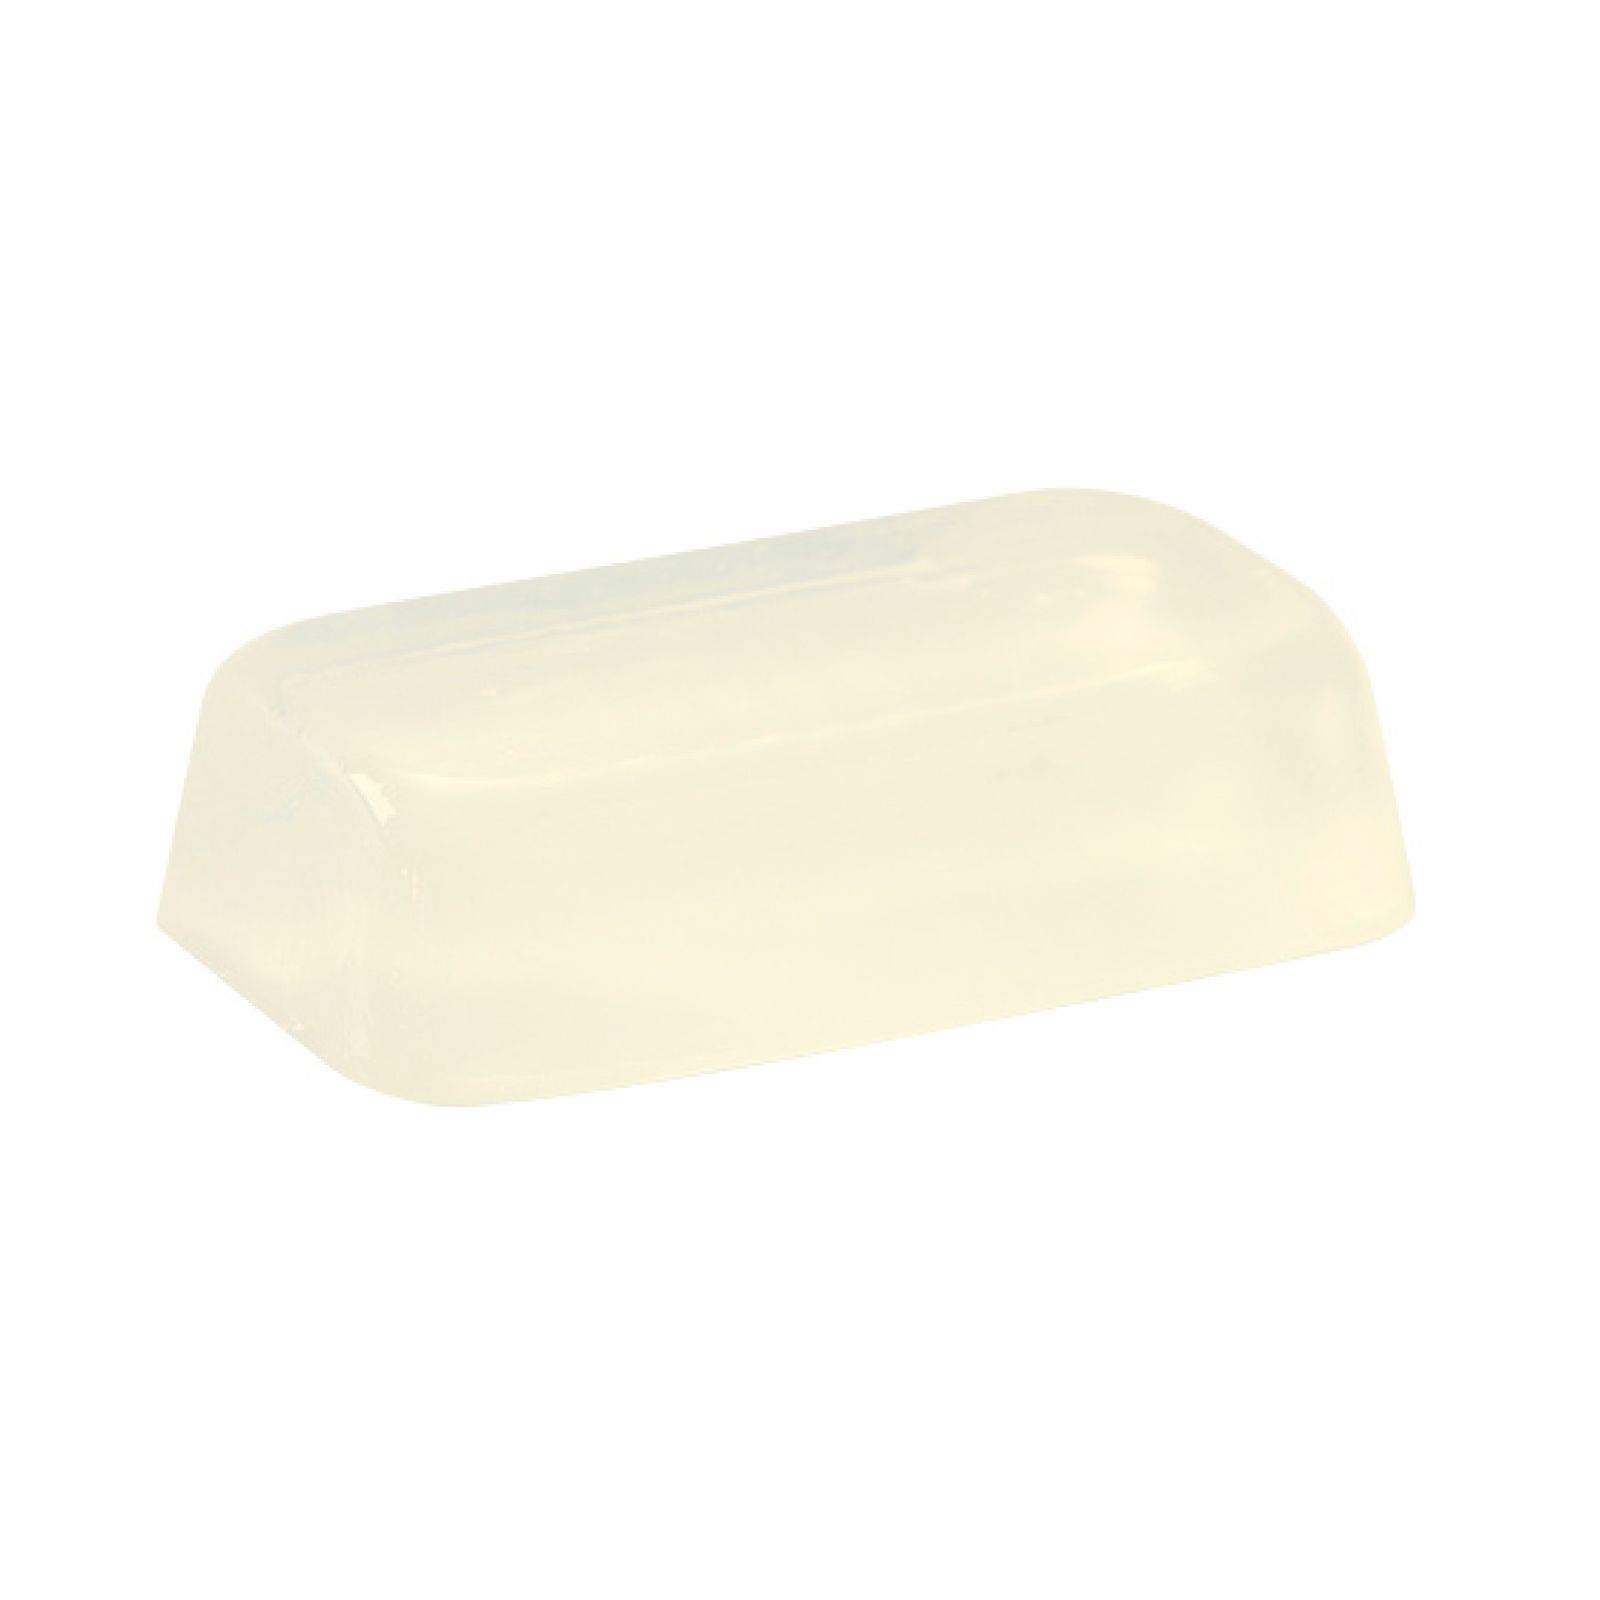 We R Makers • SUDS base de jabón transparente Aceite de oliva 909gr